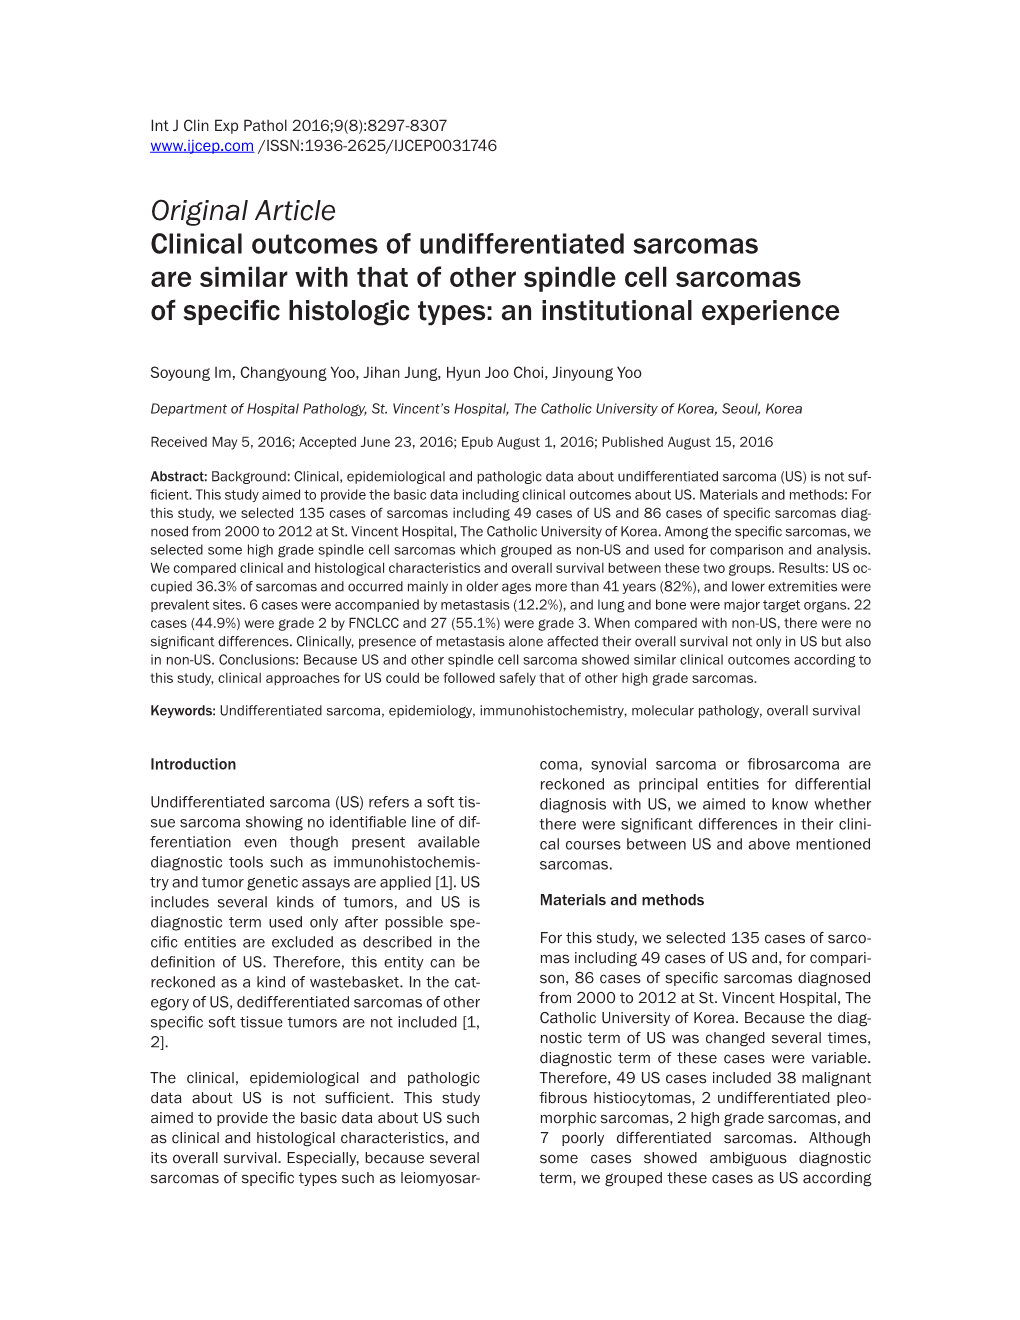 Original Article Clinical Outcomes of Undifferentiated Sarcomas Are